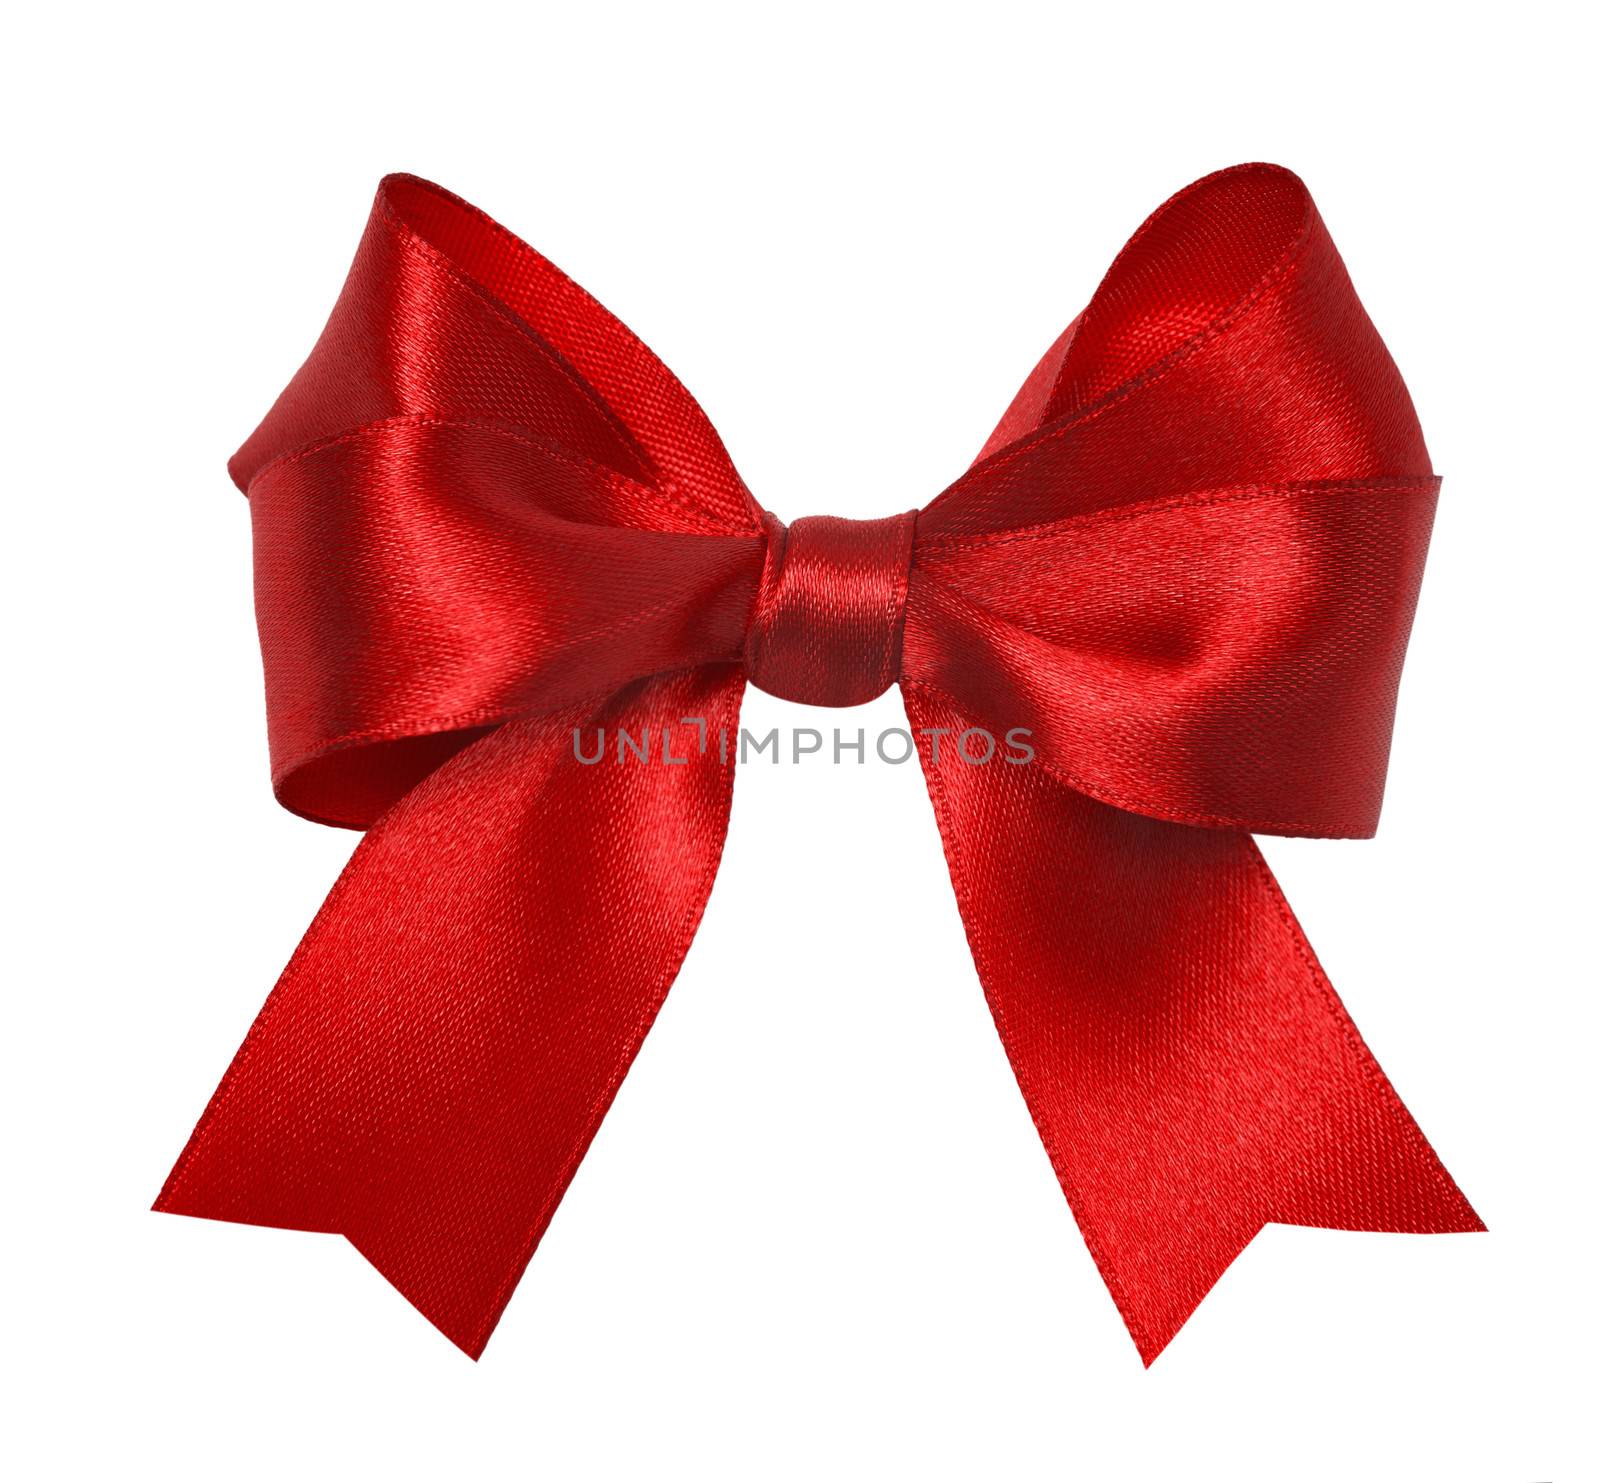 Shiny red satin ribbon on white background